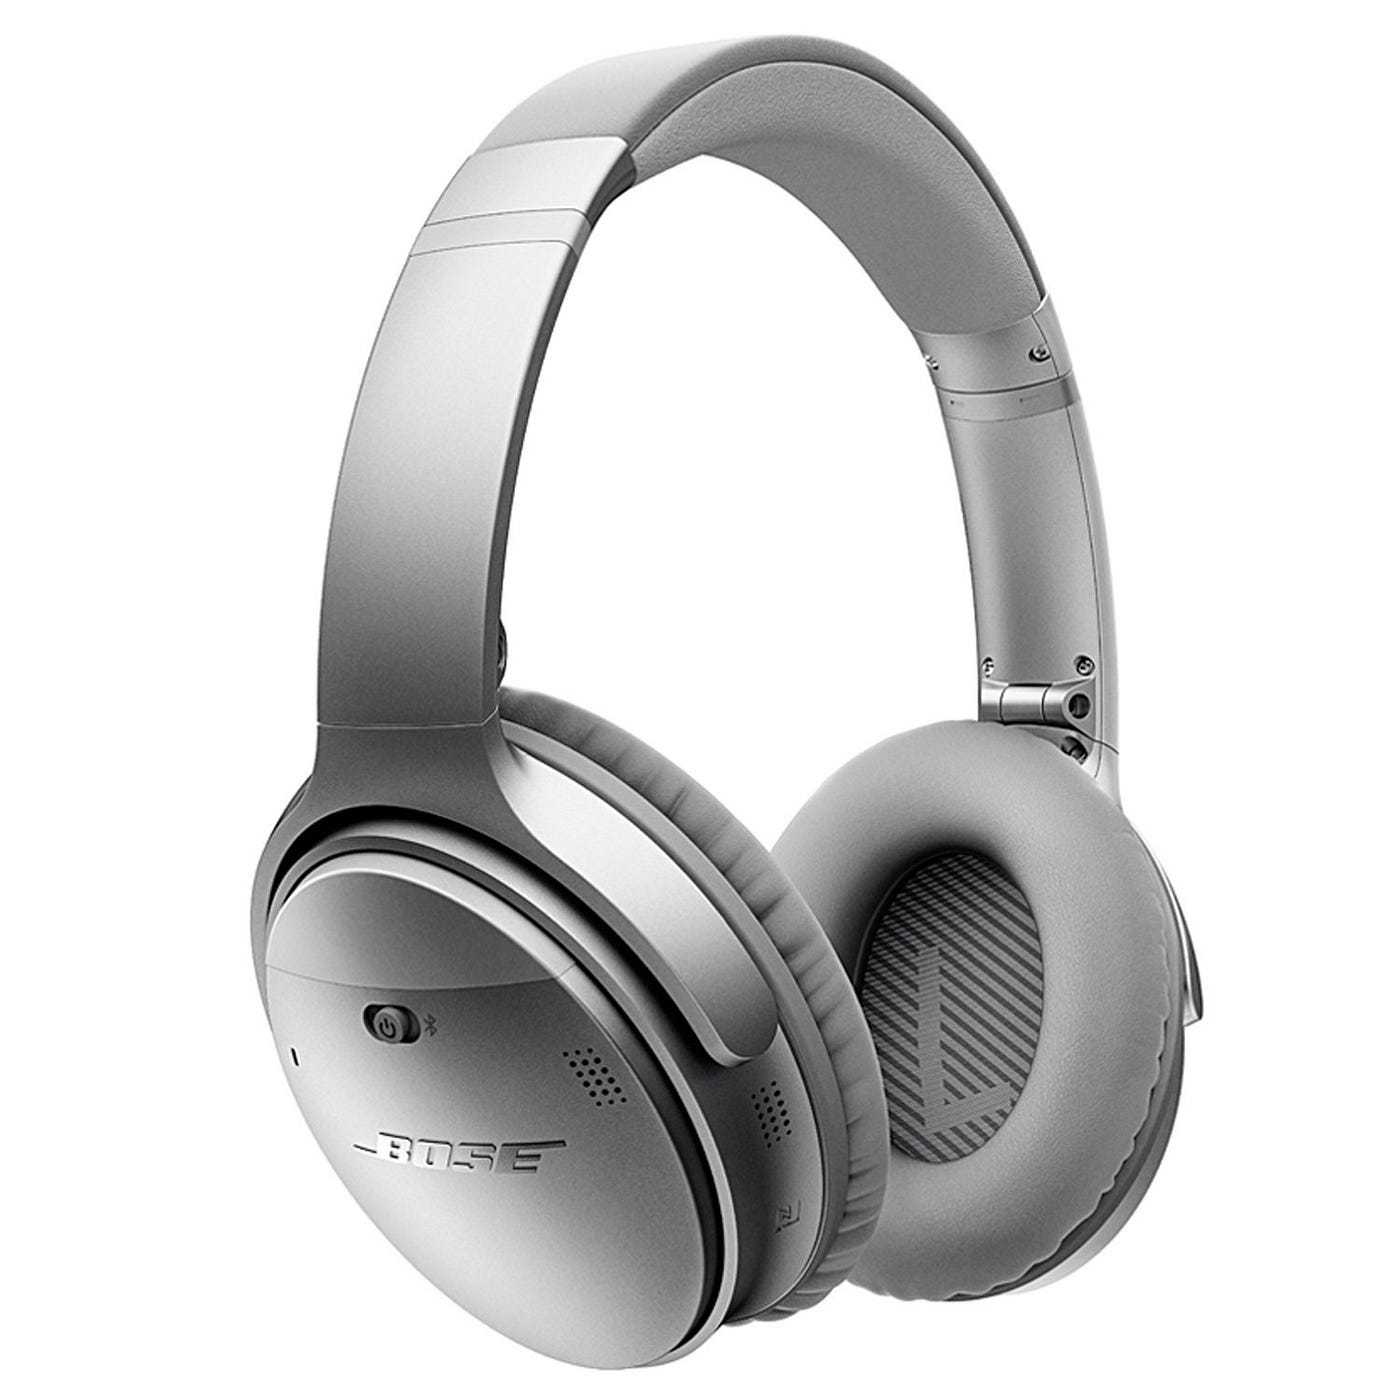 Headphone Showdown: Sony MDR-1000X Vs Bose QuietComfort 35 | by Alex Rowe |  Medium